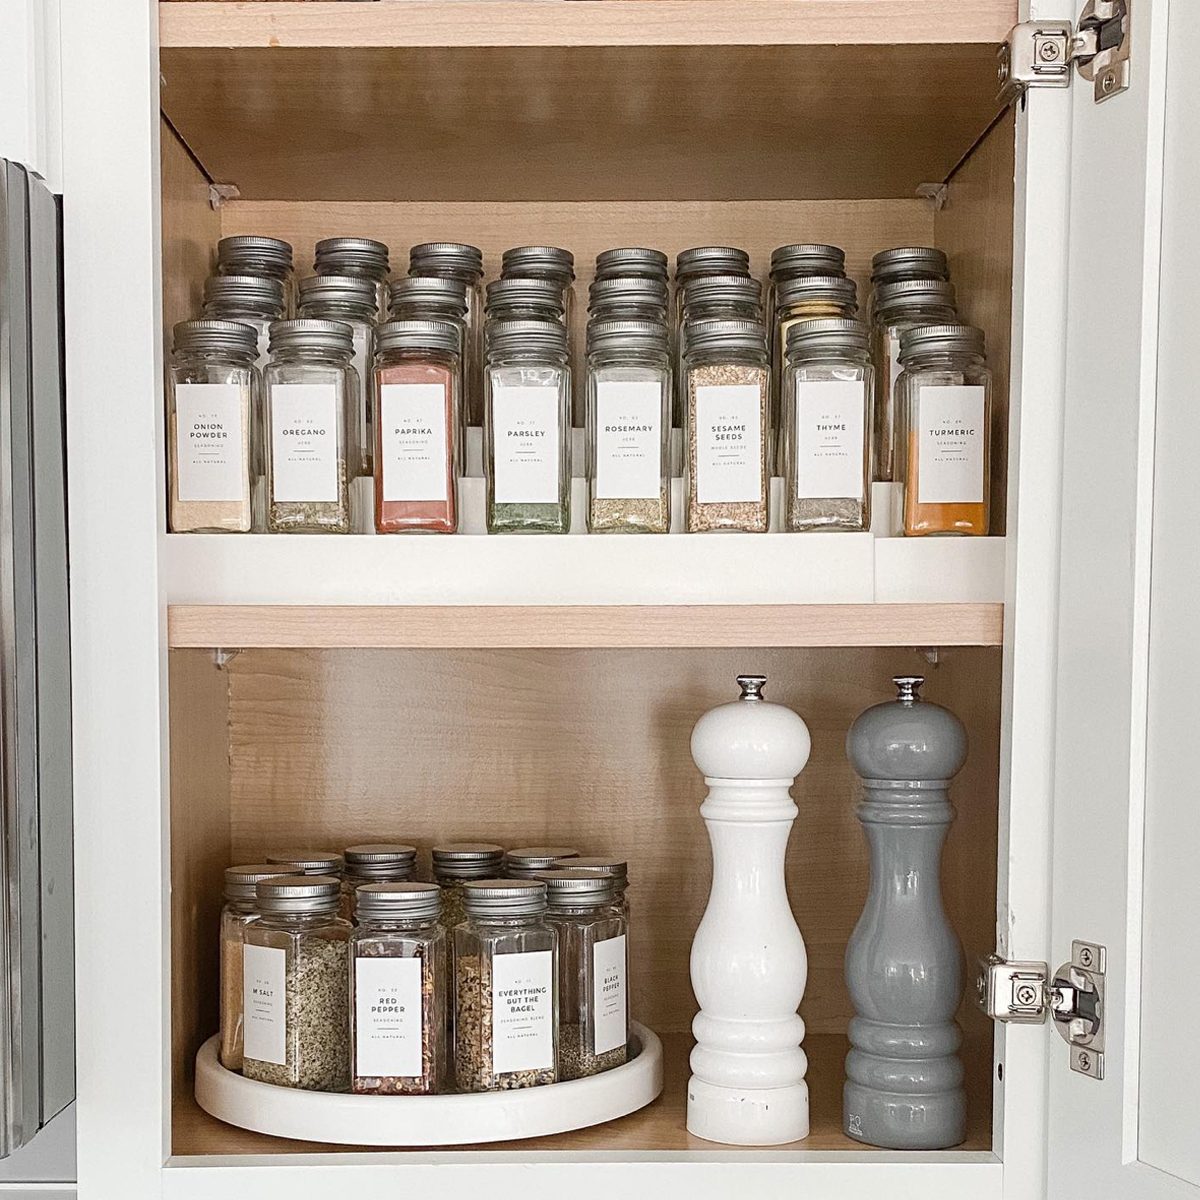 Matching Spice Jars Courtesy @merrill.henderson Via Instagram